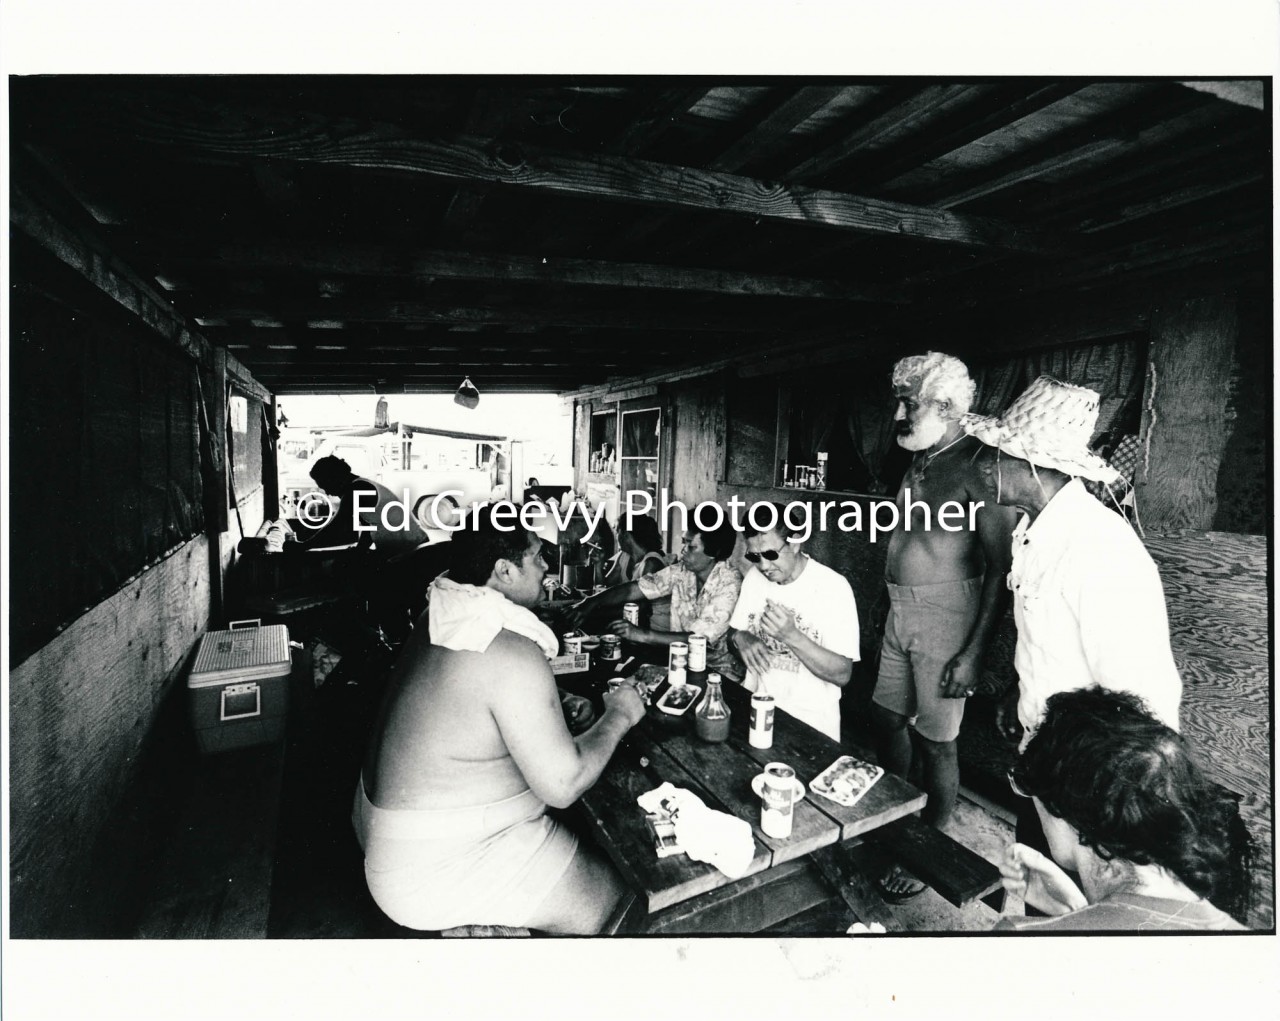 Lunch on Sand Island, Puhipau and George Hoʻaiʻai (right)  (10 November 1979) Negative: 4090-3-19A | Ed Greevy Photographer